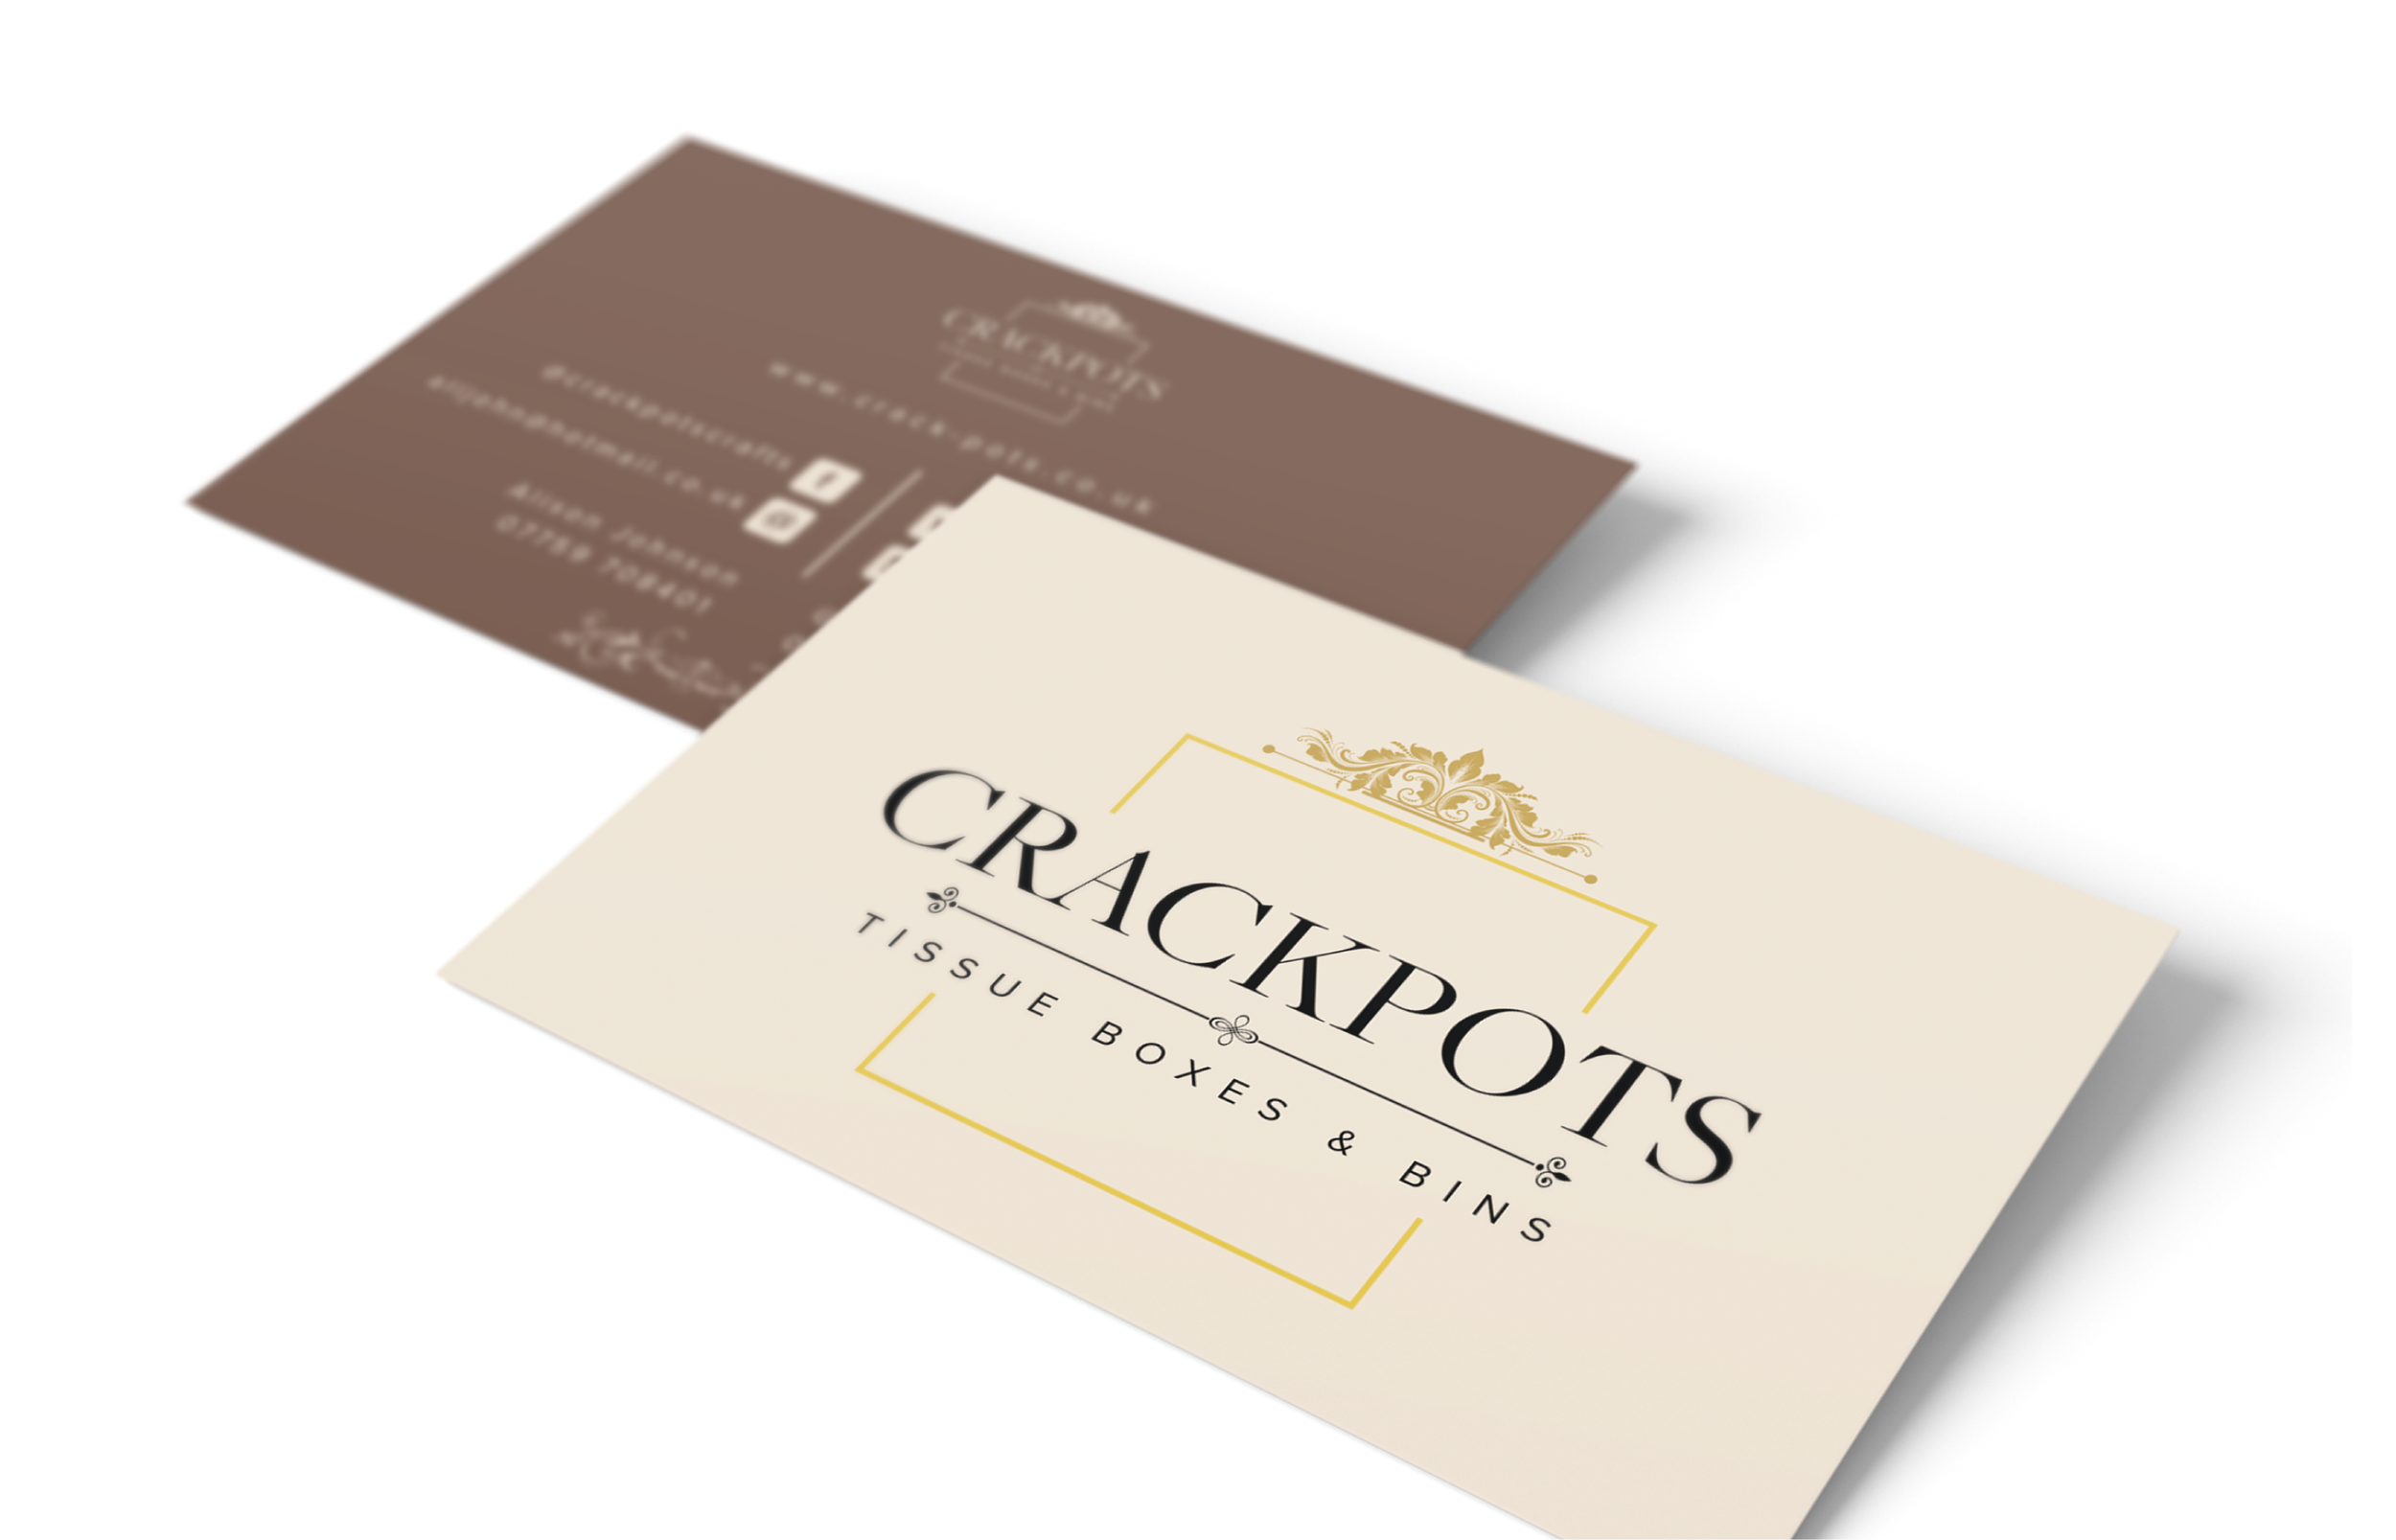 Crackpots Business Card Design (Copy)